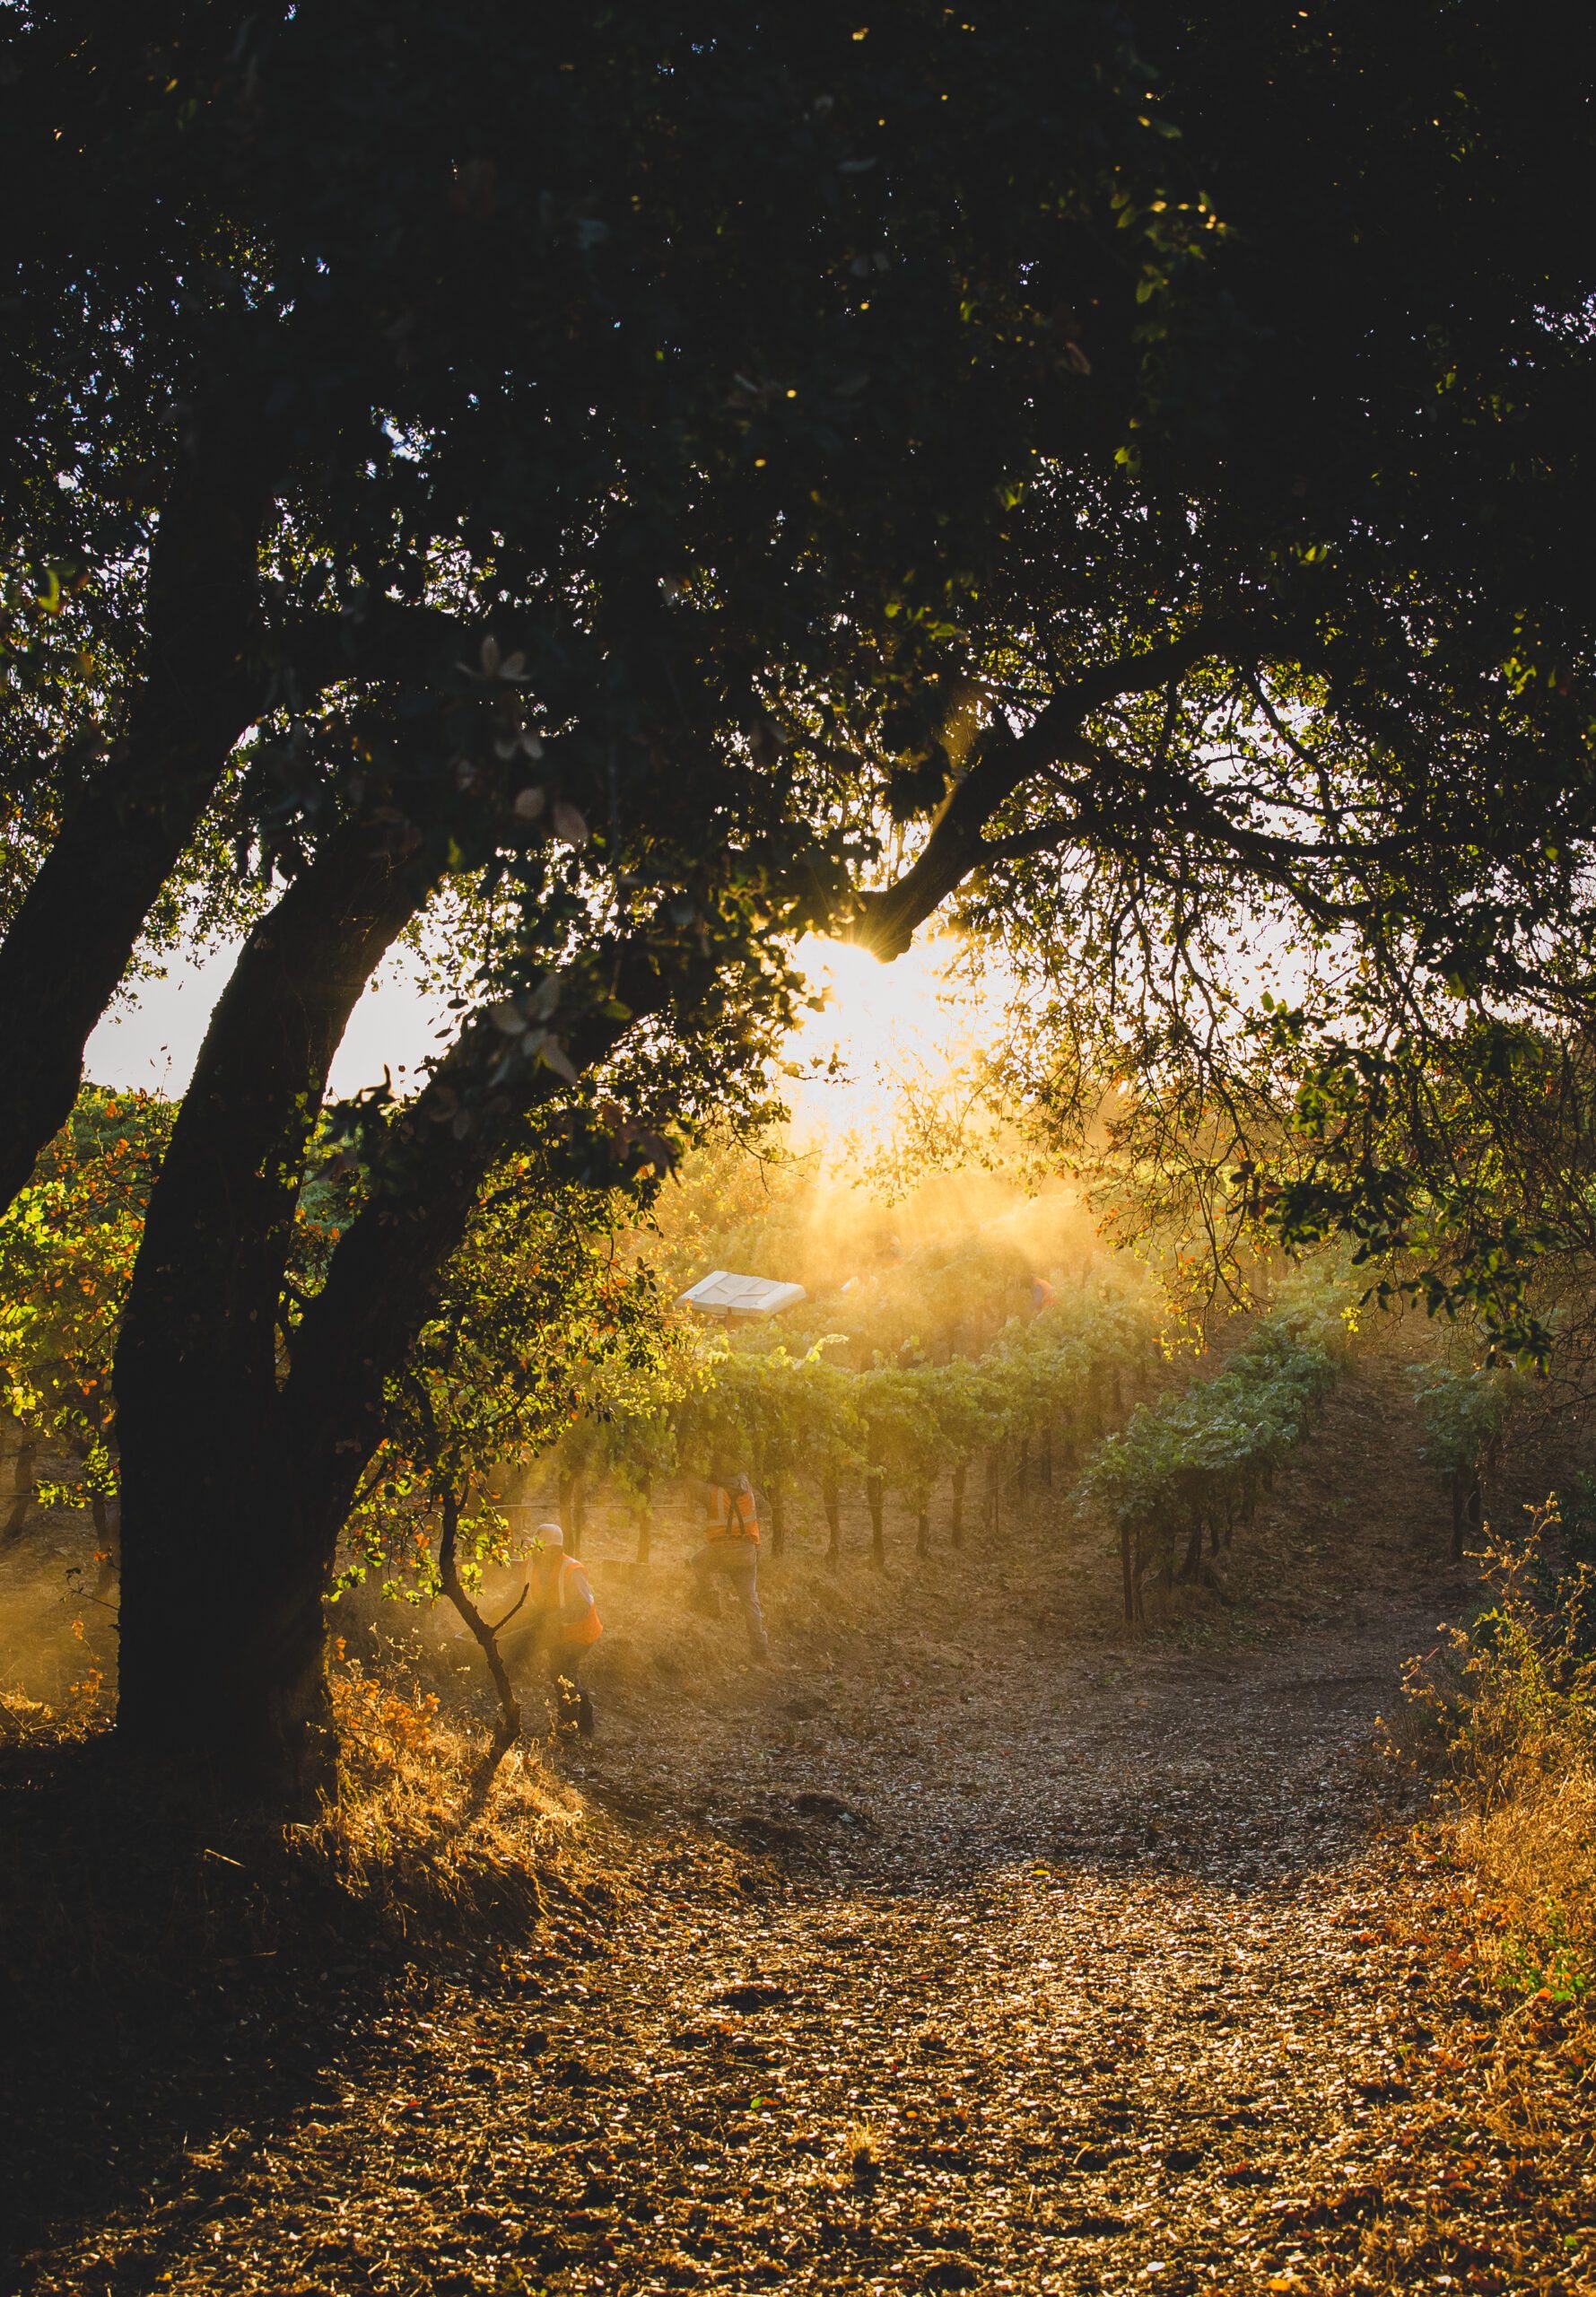 Sun shining through the tree and vineyards